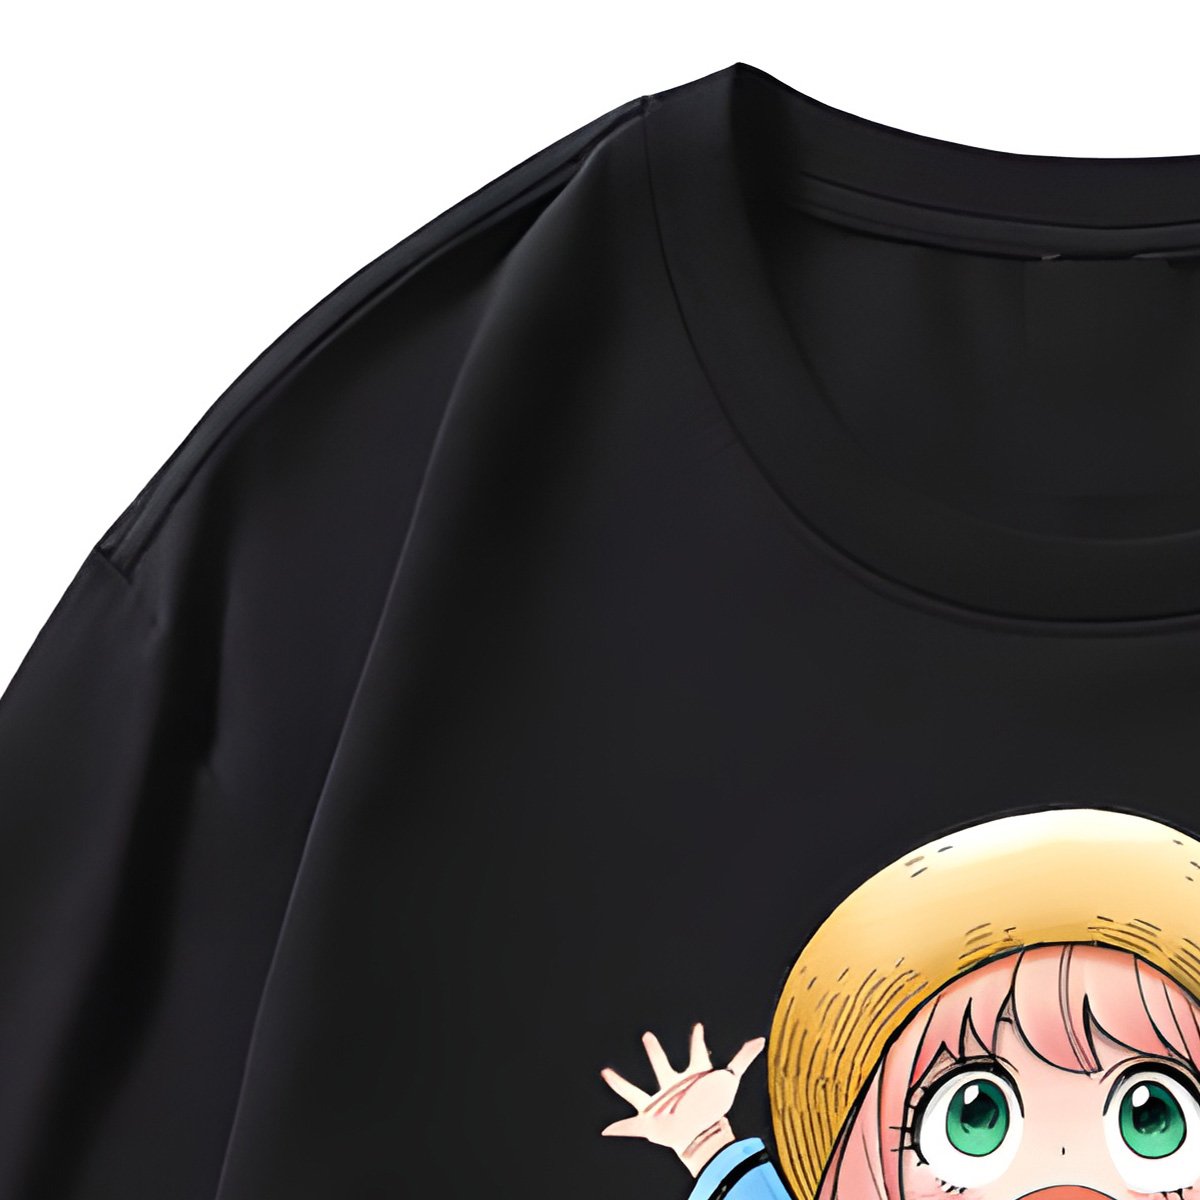 Spy x Family Anime T-Shirt- Black